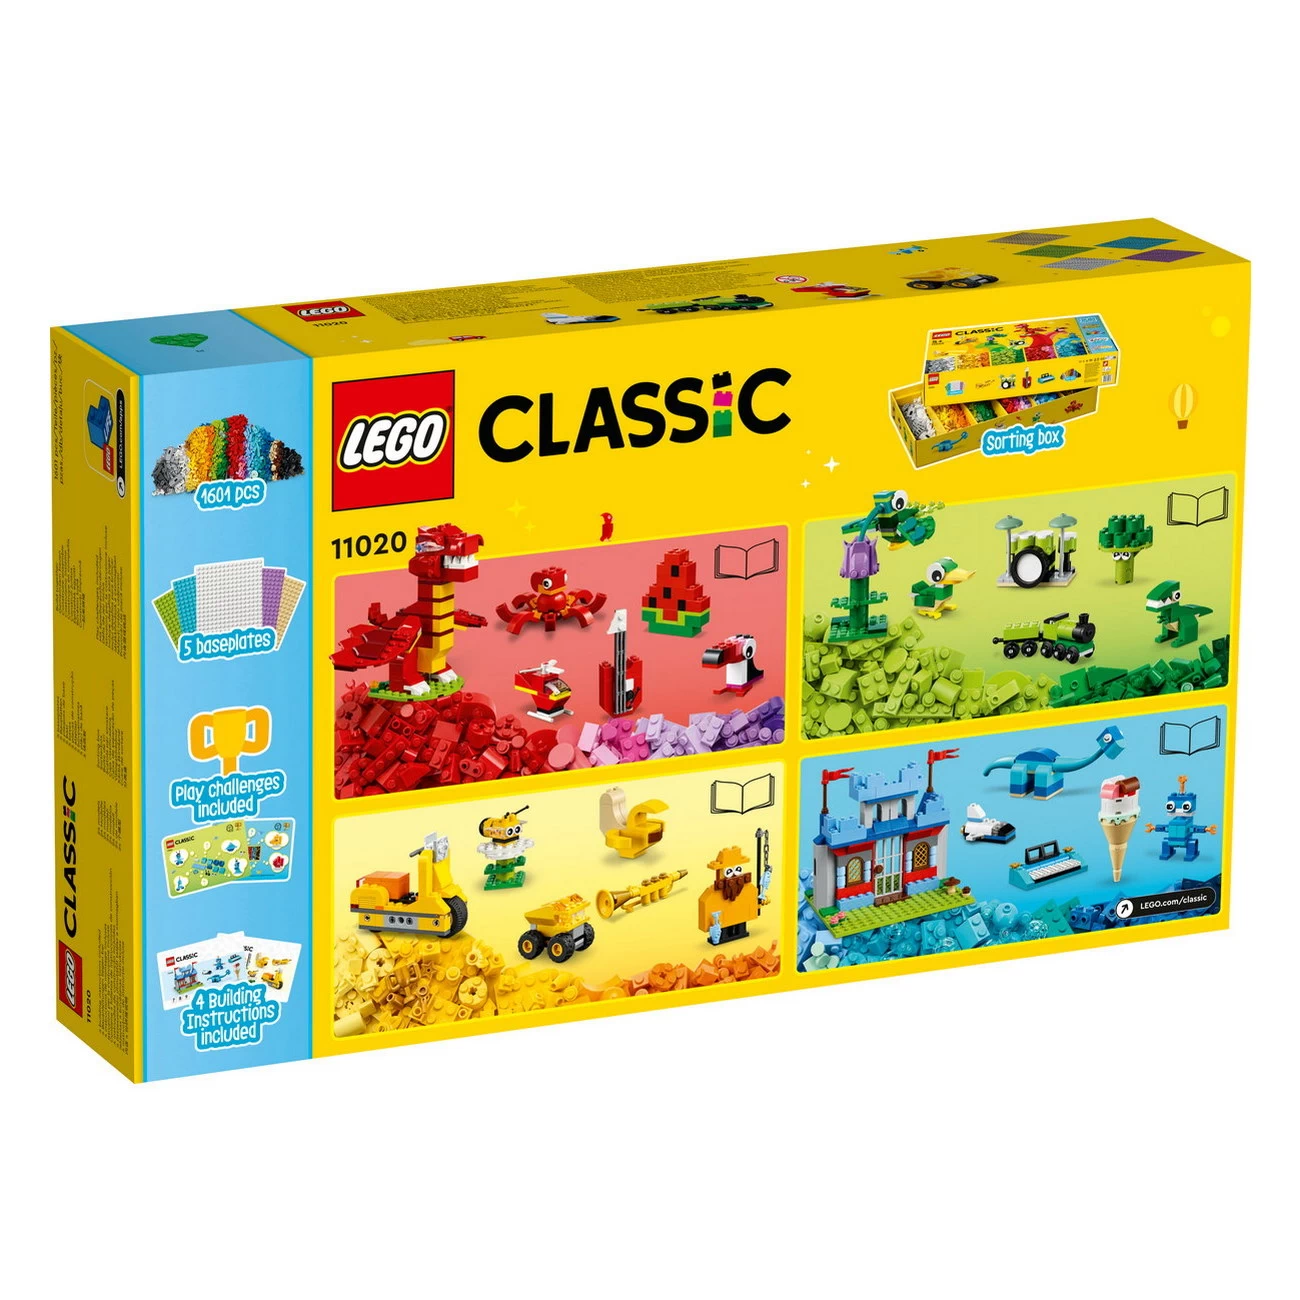 LEGO Classic 11020 - Gemeinsam bauen